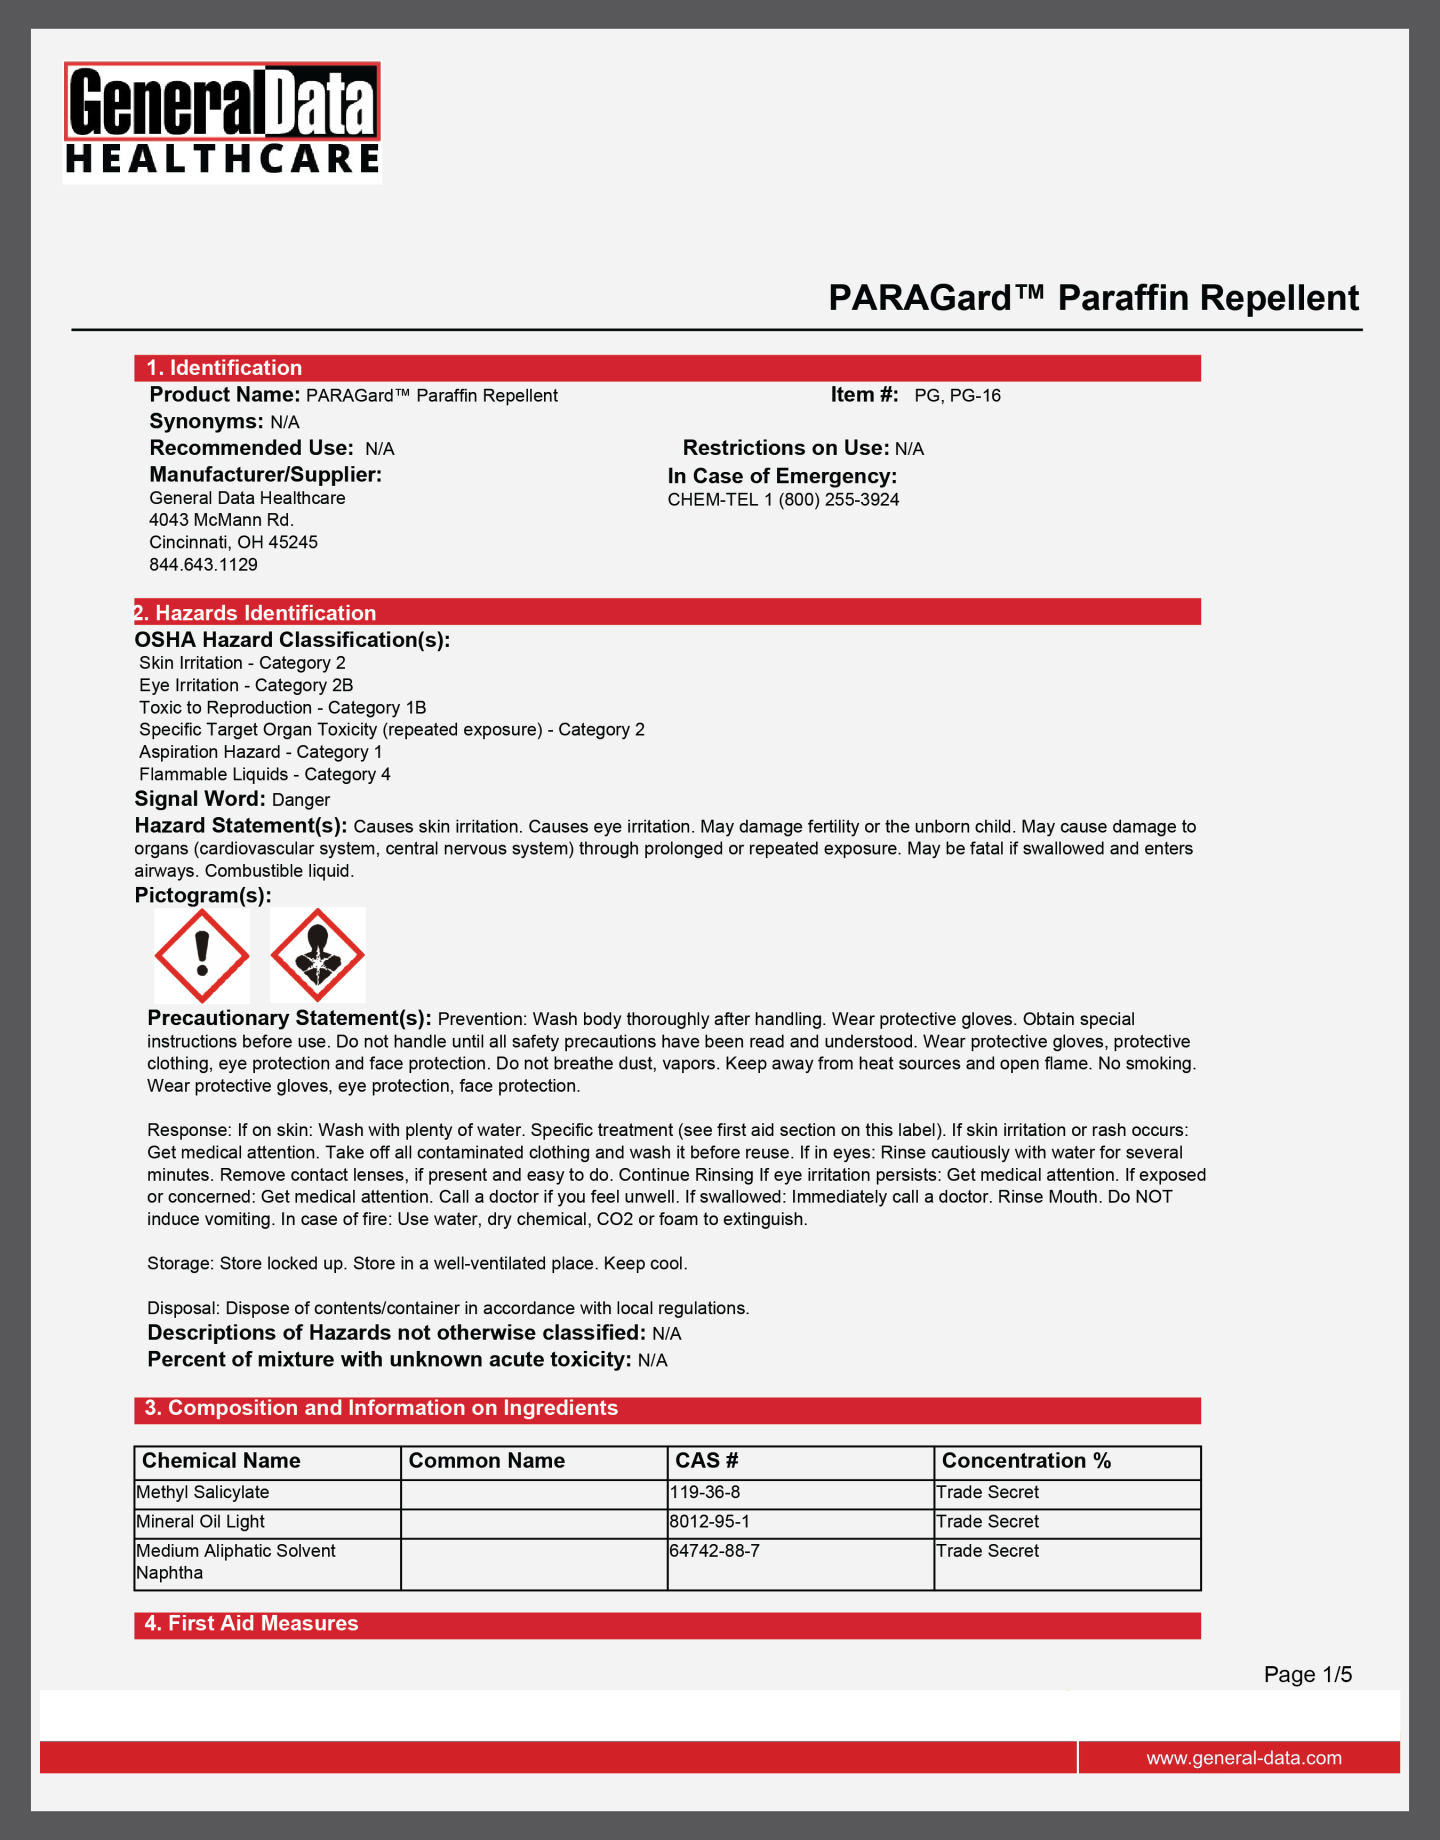 PARAGard Paraffin Repellent Safety Data Sheet